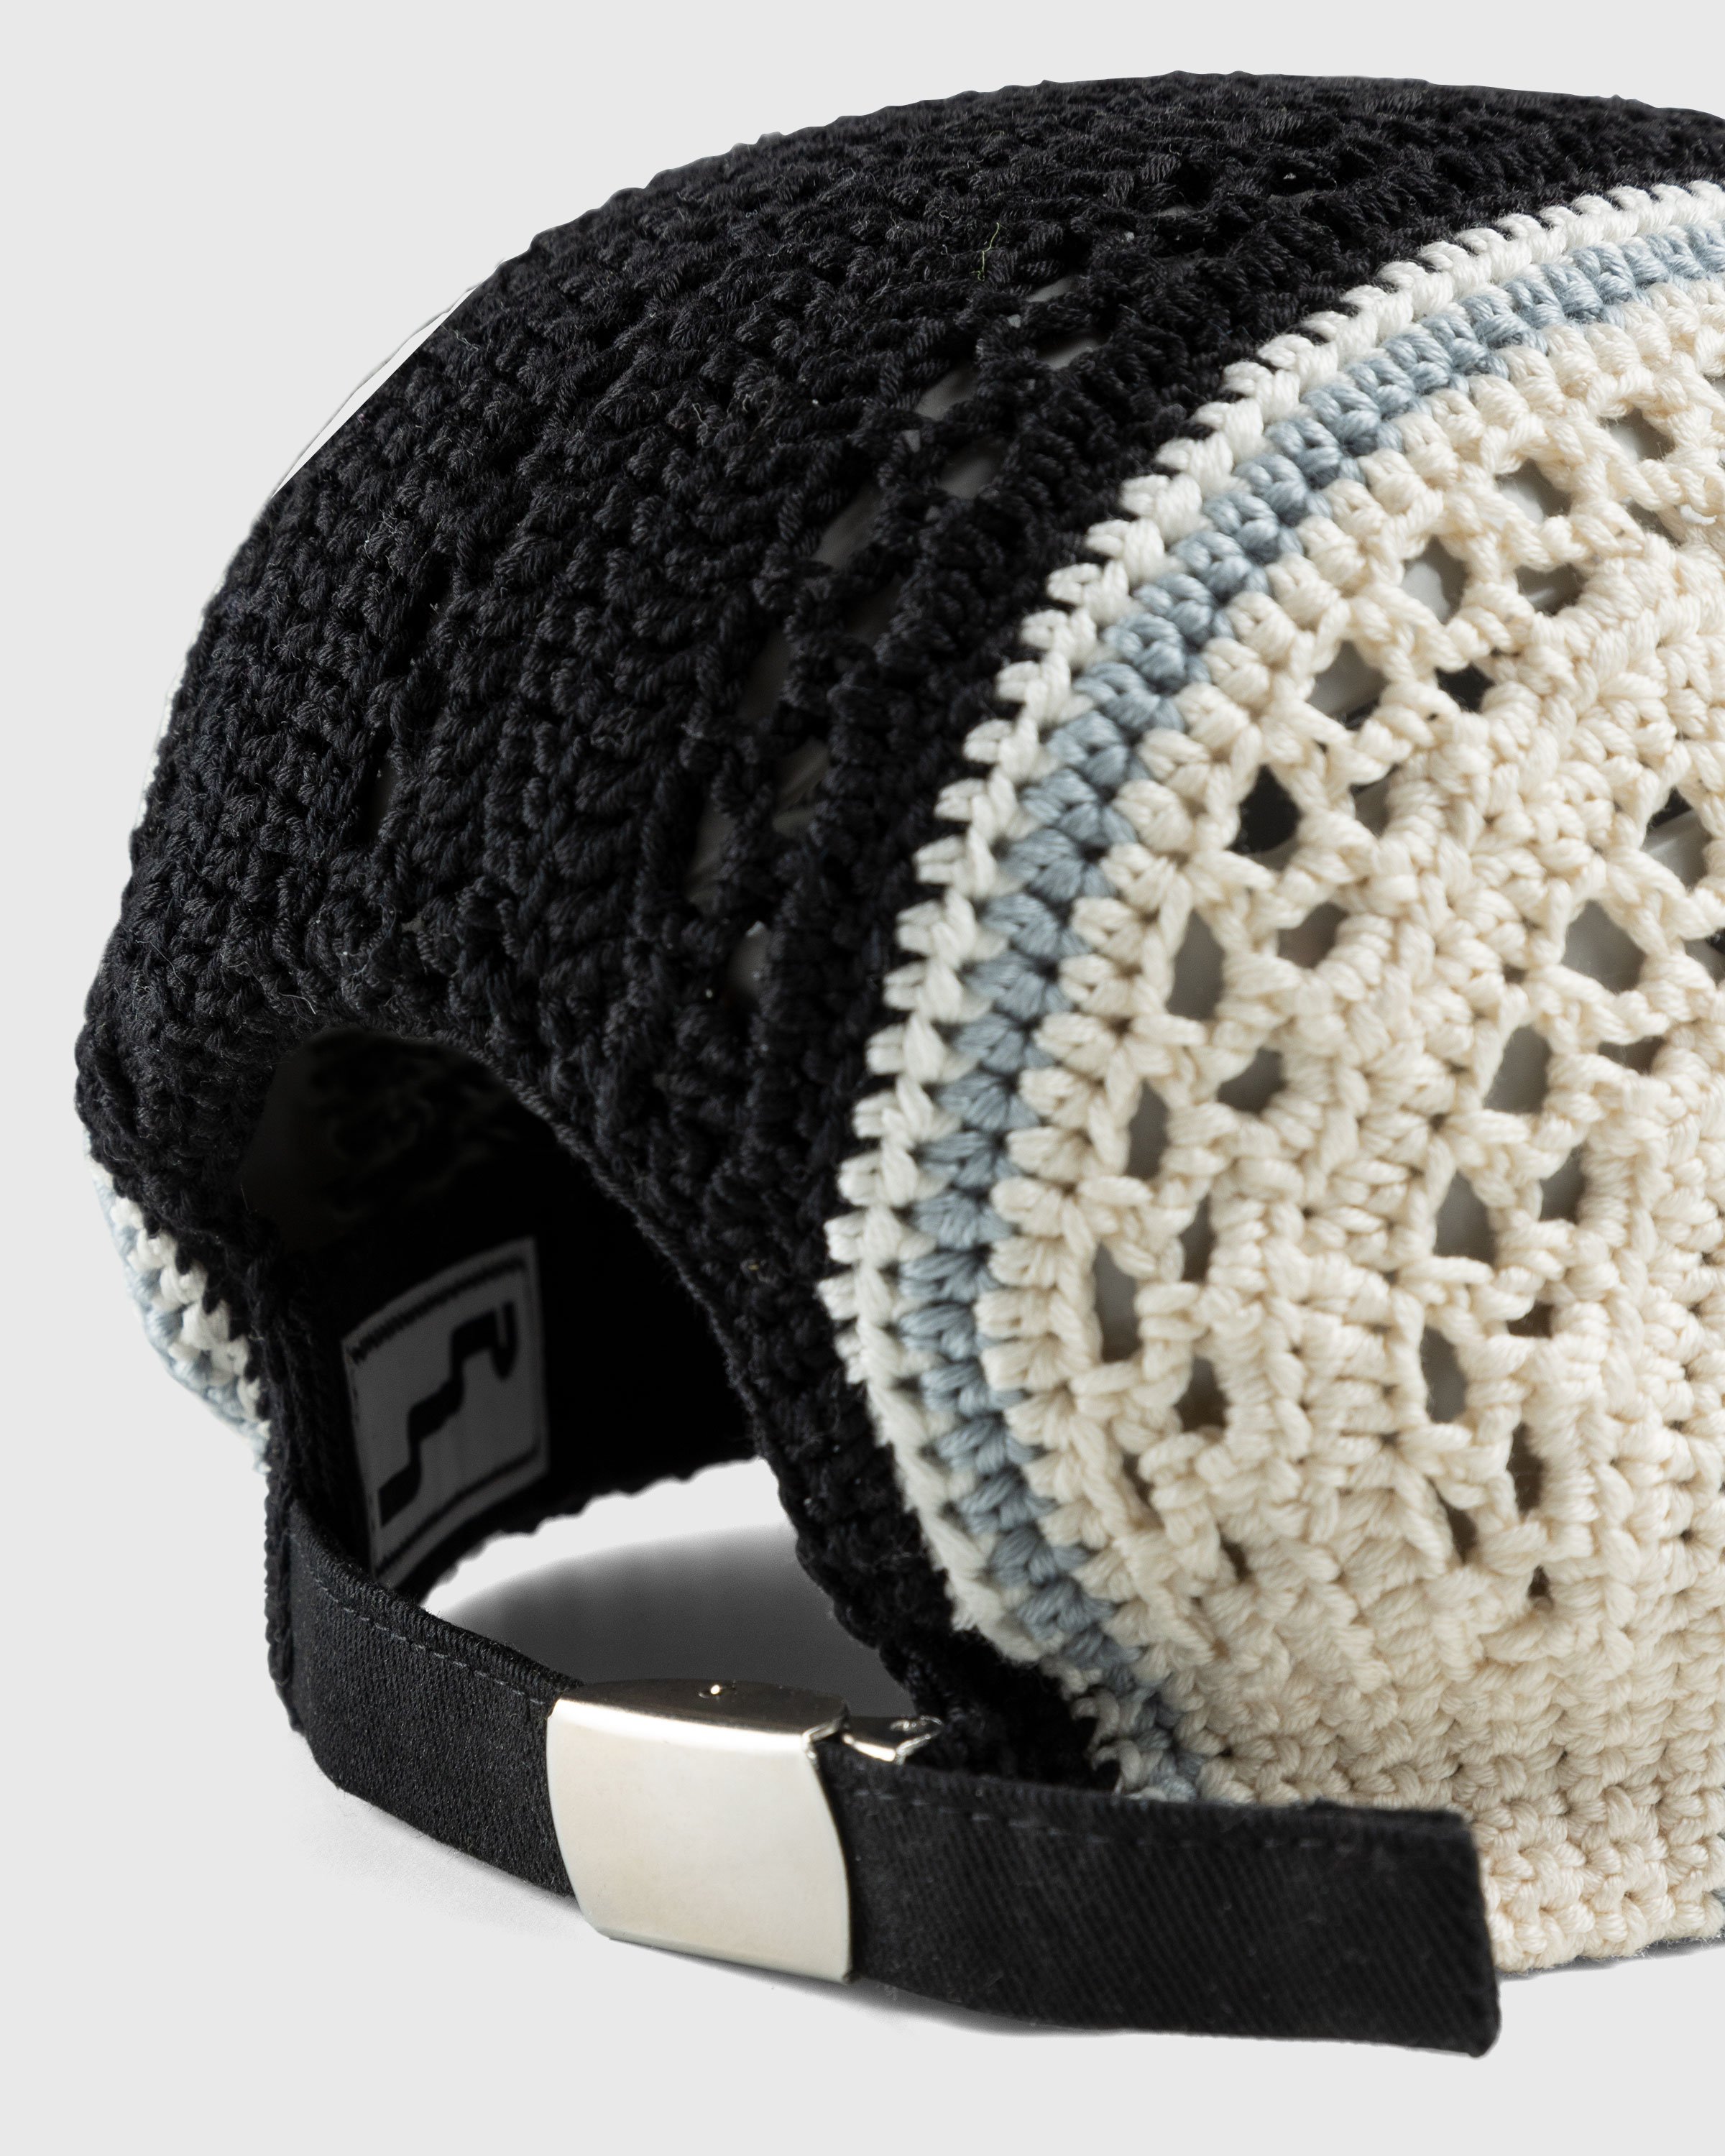 SSU - Crochet Baseball Cap Midnight Drive Black - Accessories - Black - Image 4